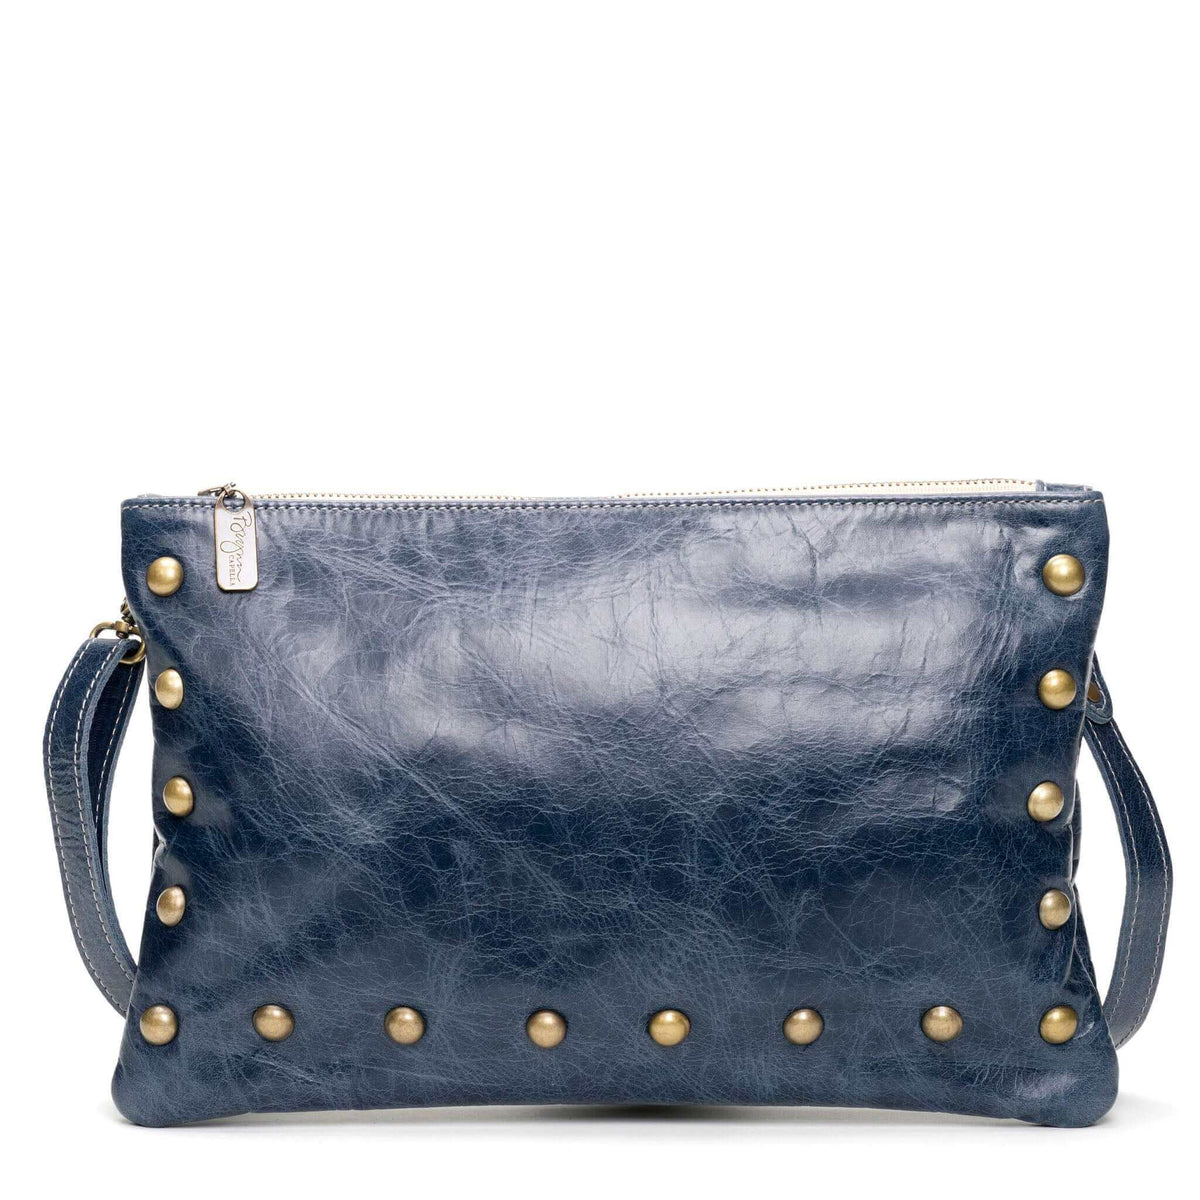 Nikki Clutch Crossbody - Cape Cod, blue - Brynn Capella, Small Bag, full-grain leather